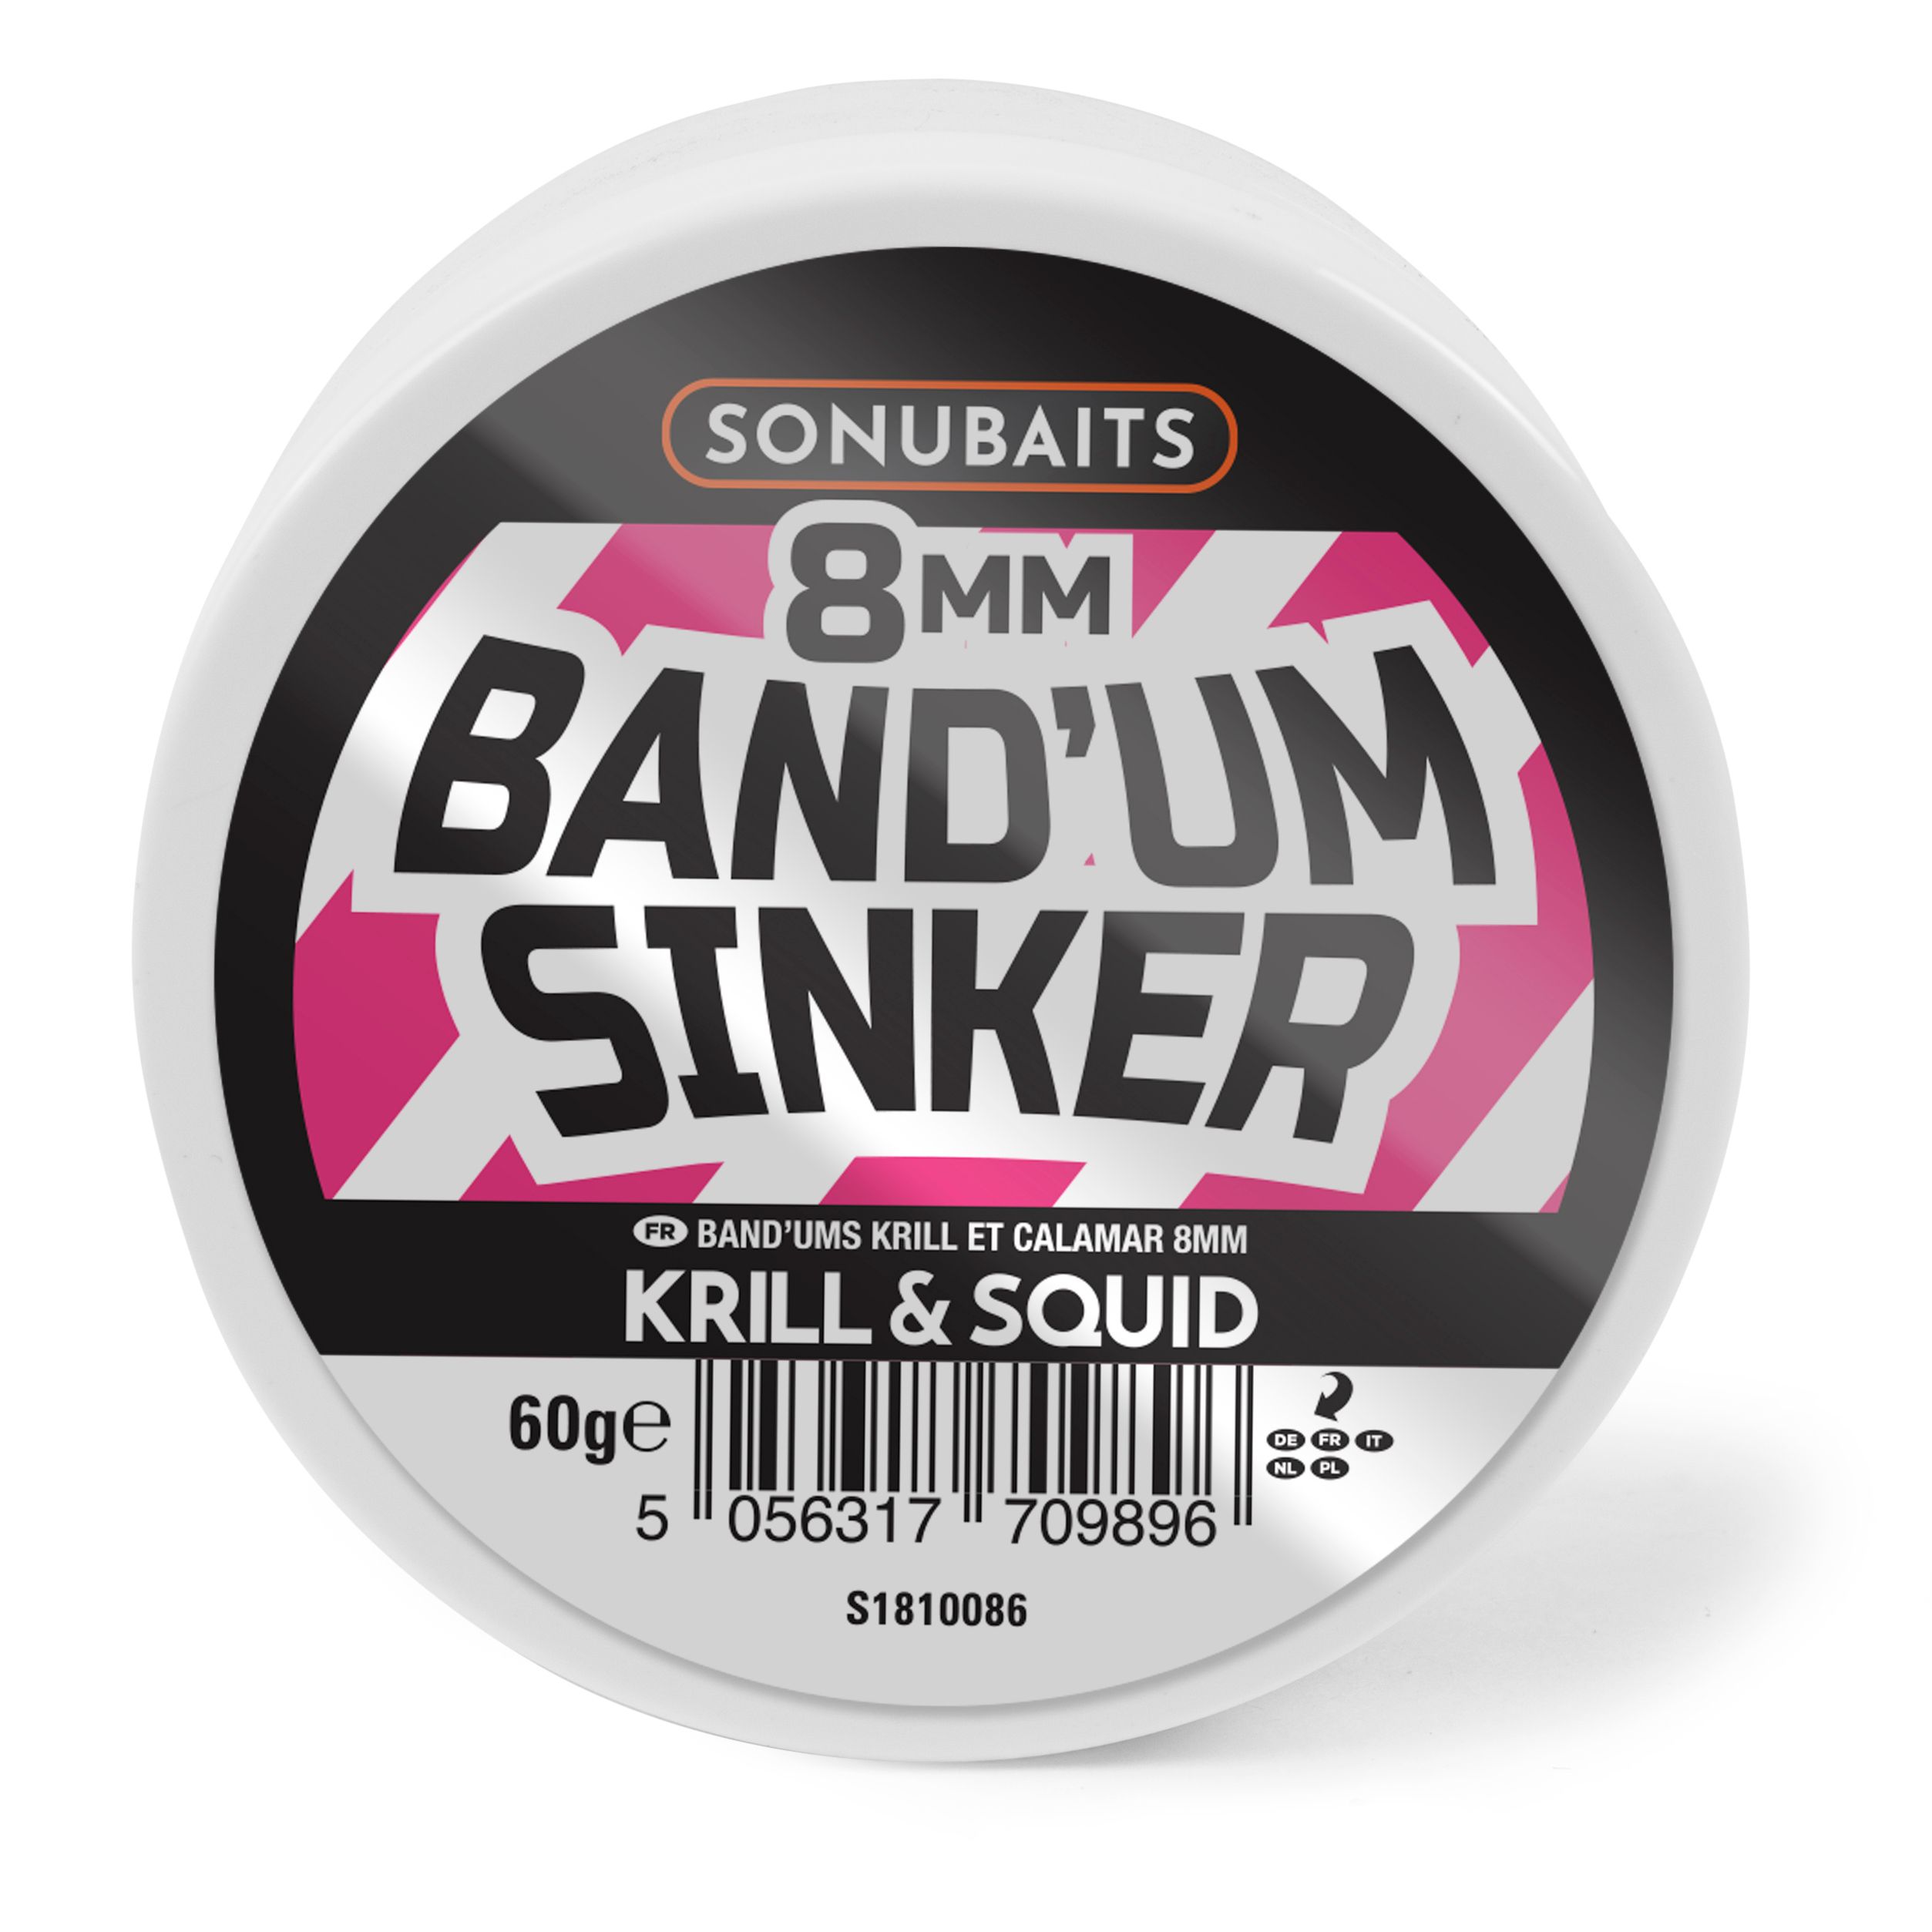 Bouillettes Sonubaits Band'um Sinker 8mm - Krill & Squid